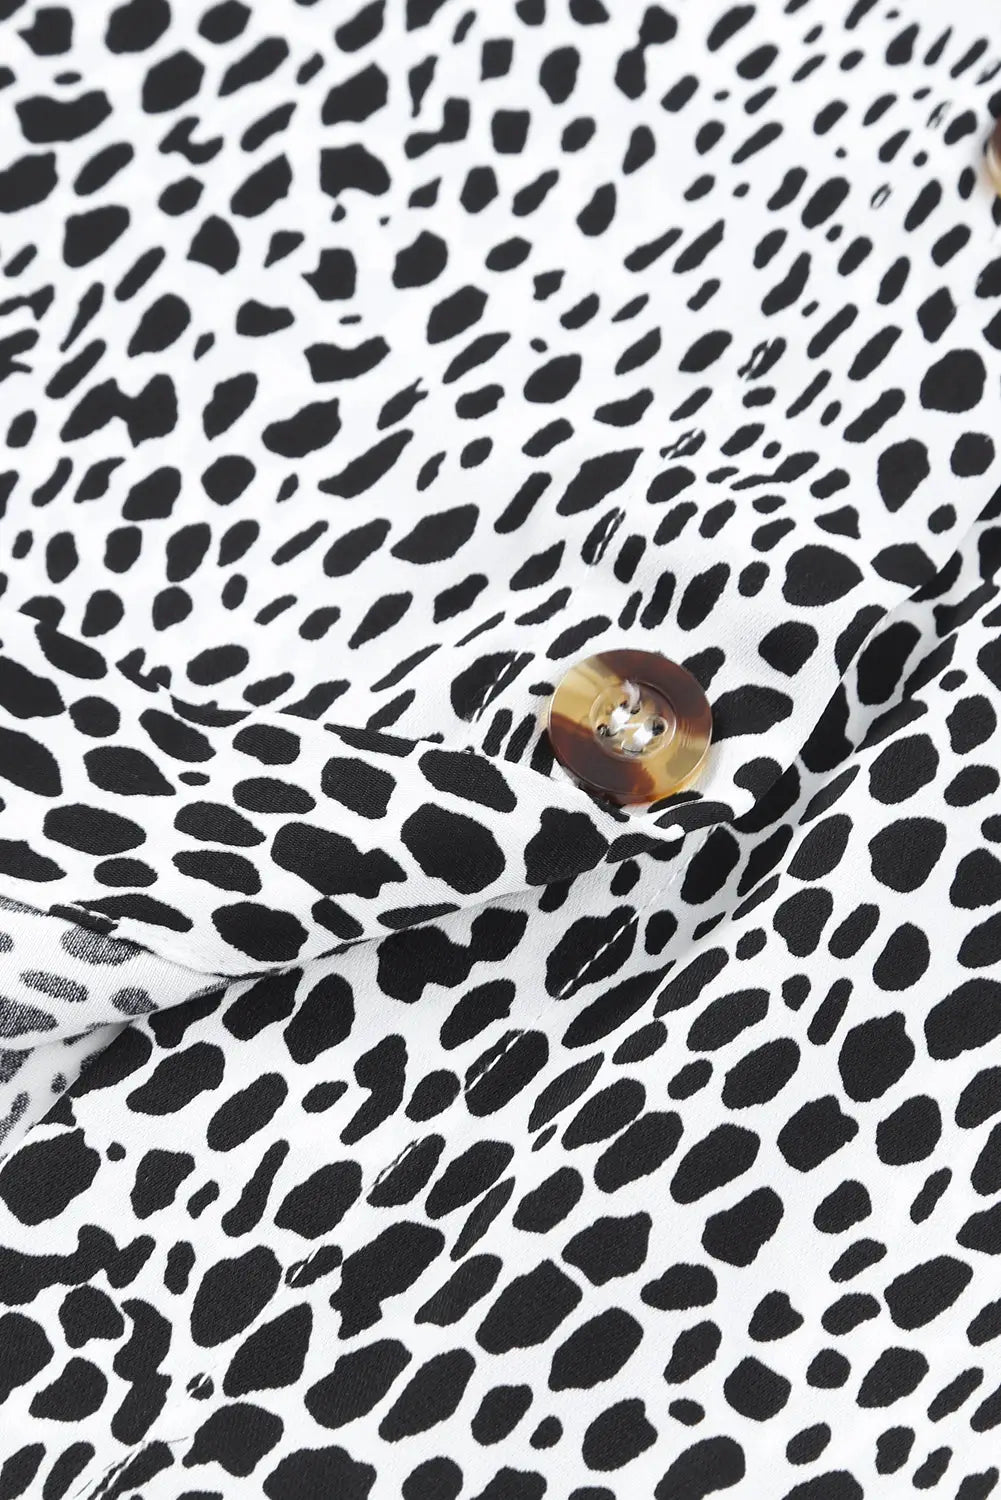 Long sleeve leopard animal print shirt dress - dresses